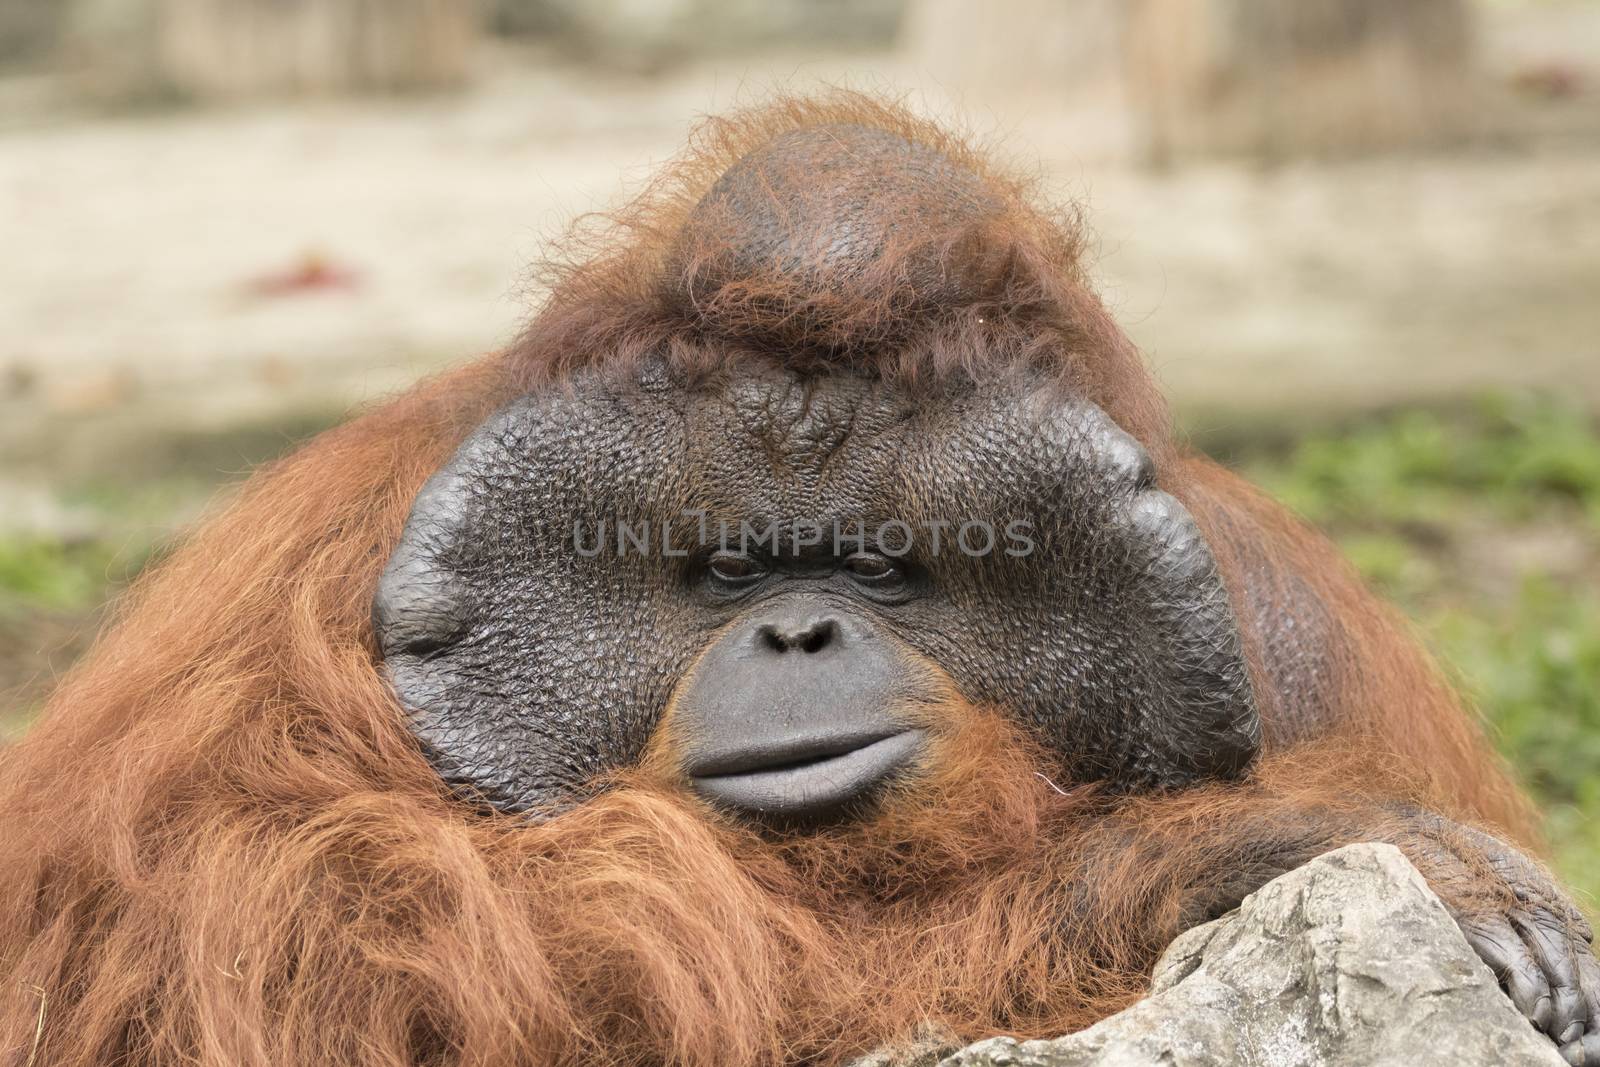 Image of a big male orangutan orange monkey.